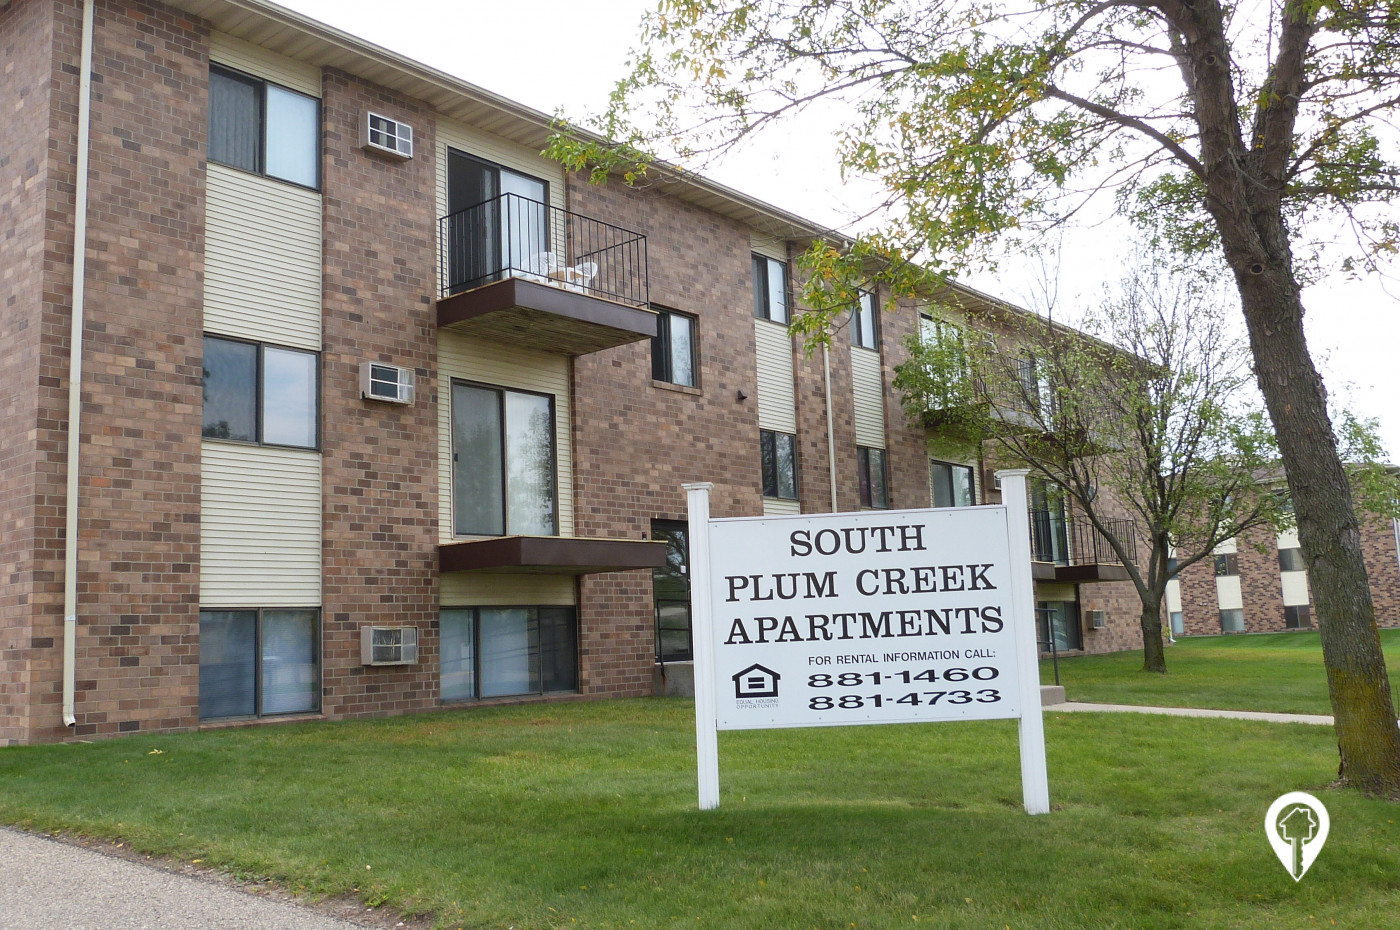 Plum Creek Properties - South Plum Creek Apartments